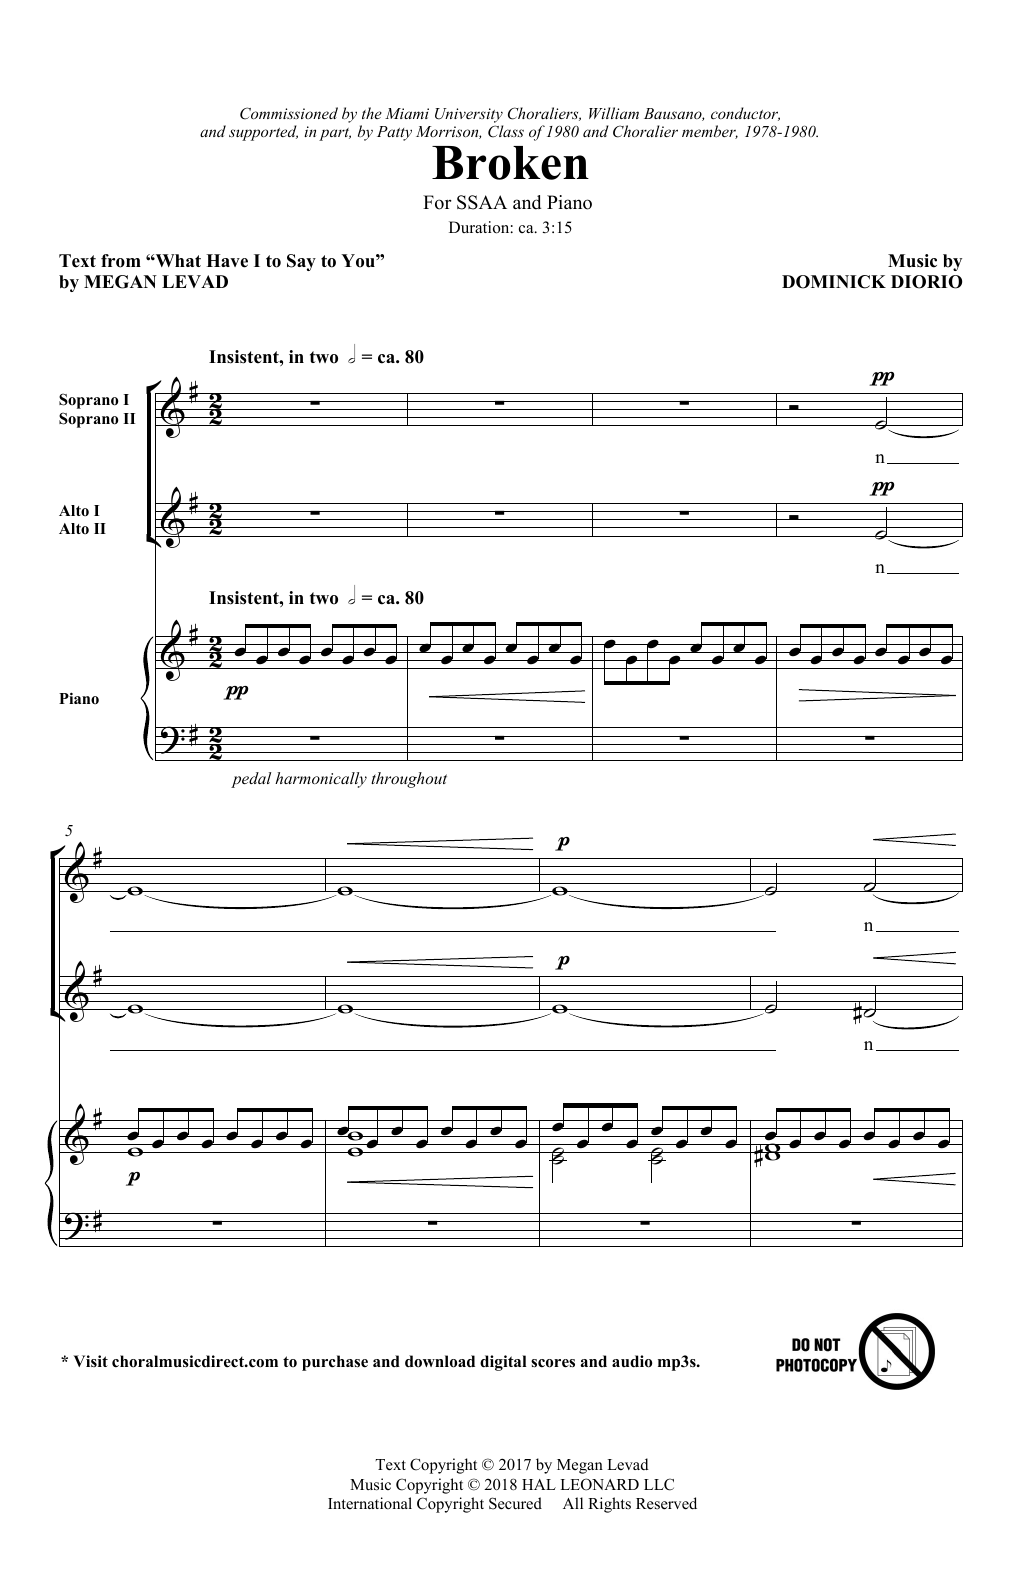 Megan Levad & Dominick DiOrio Broken Sheet Music Notes & Chords for SSA Choir - Download or Print PDF